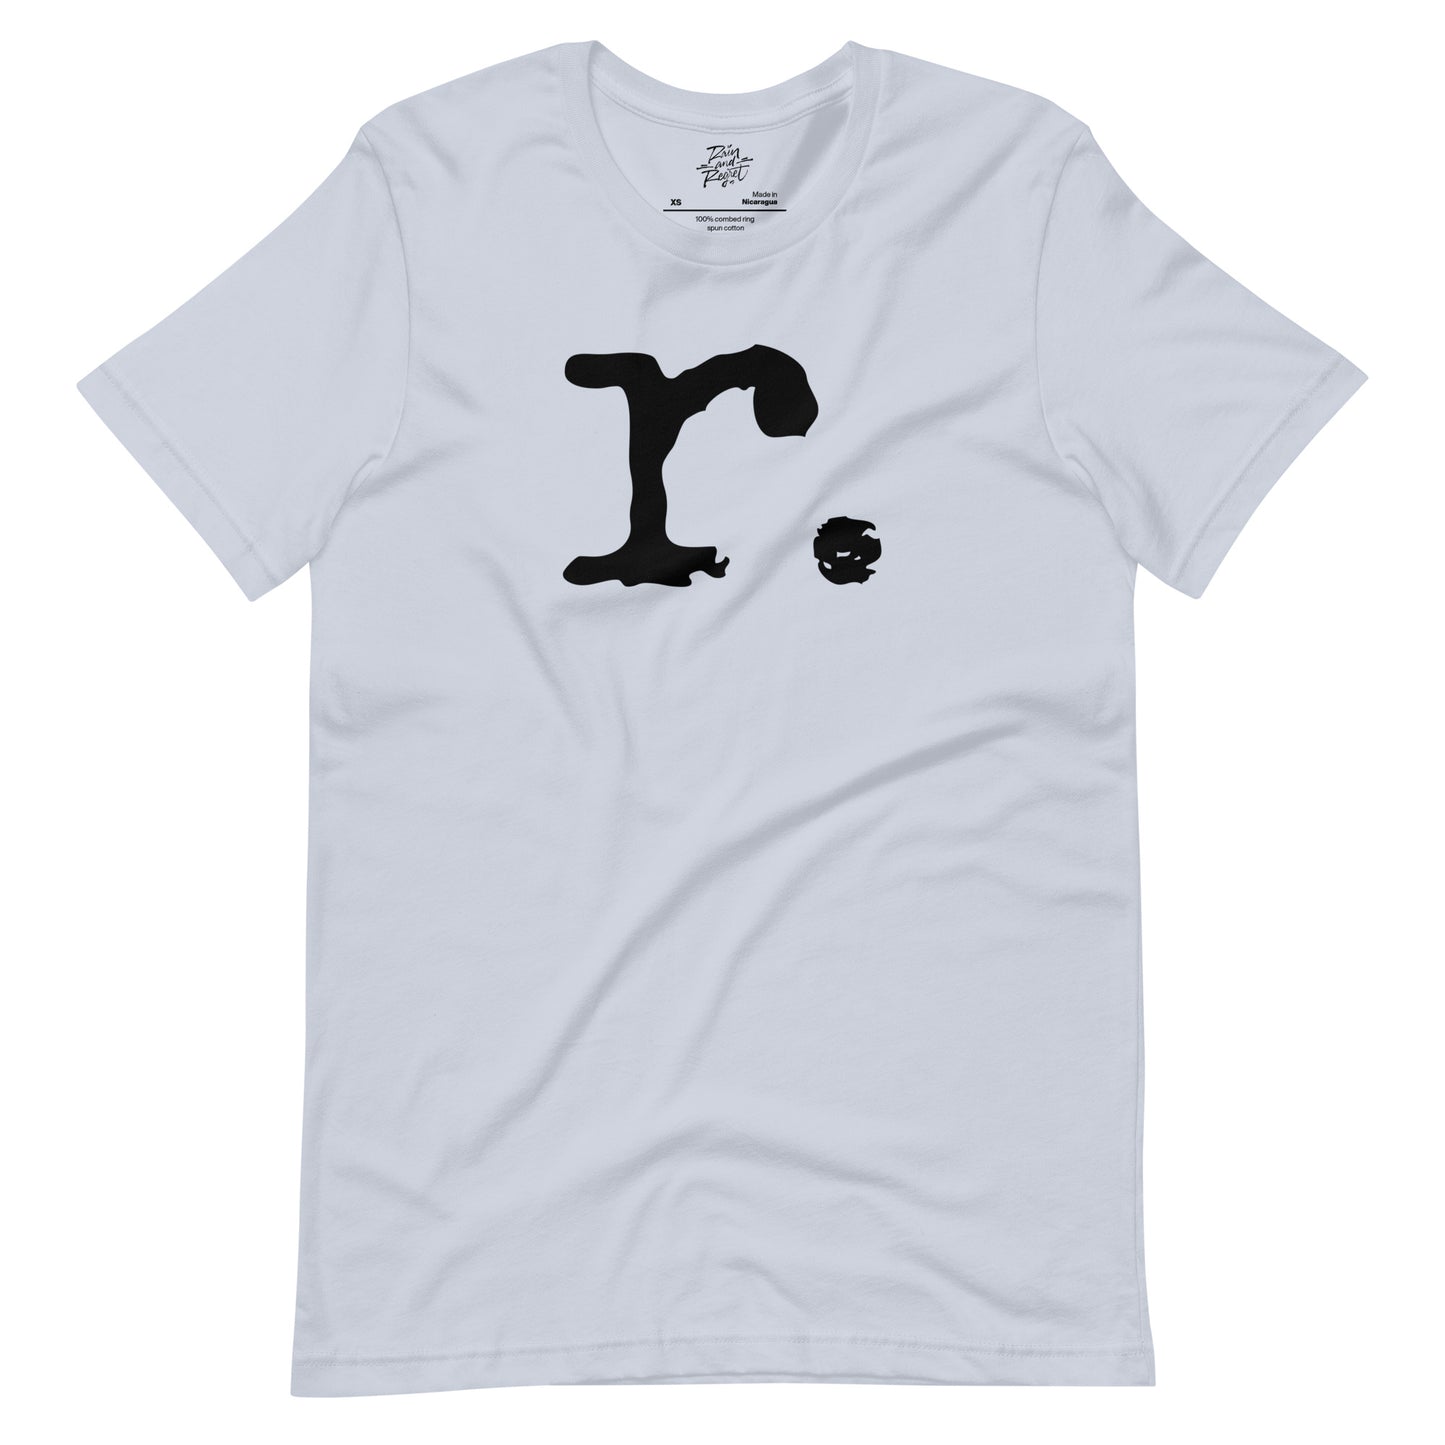 r. rain and regret Unisex t-shirt